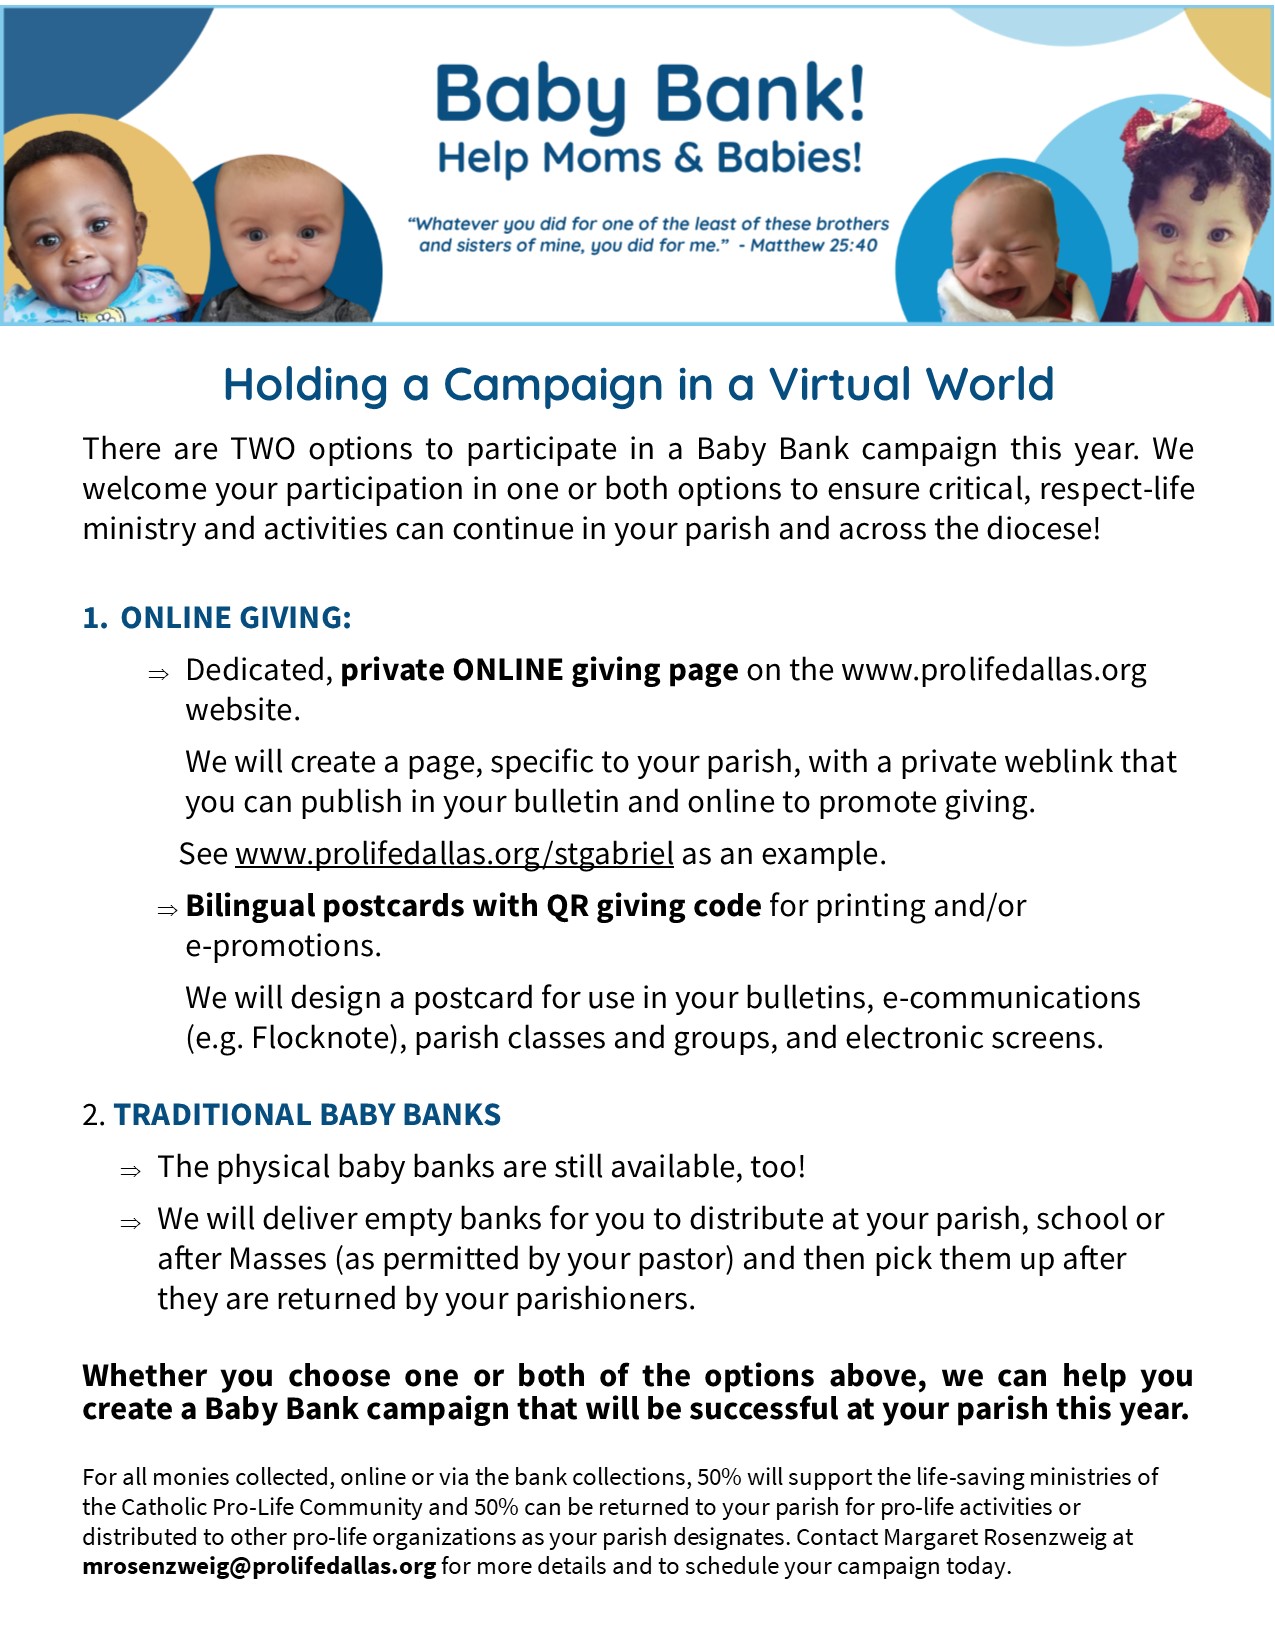 Baby Banks Virtual Campaign